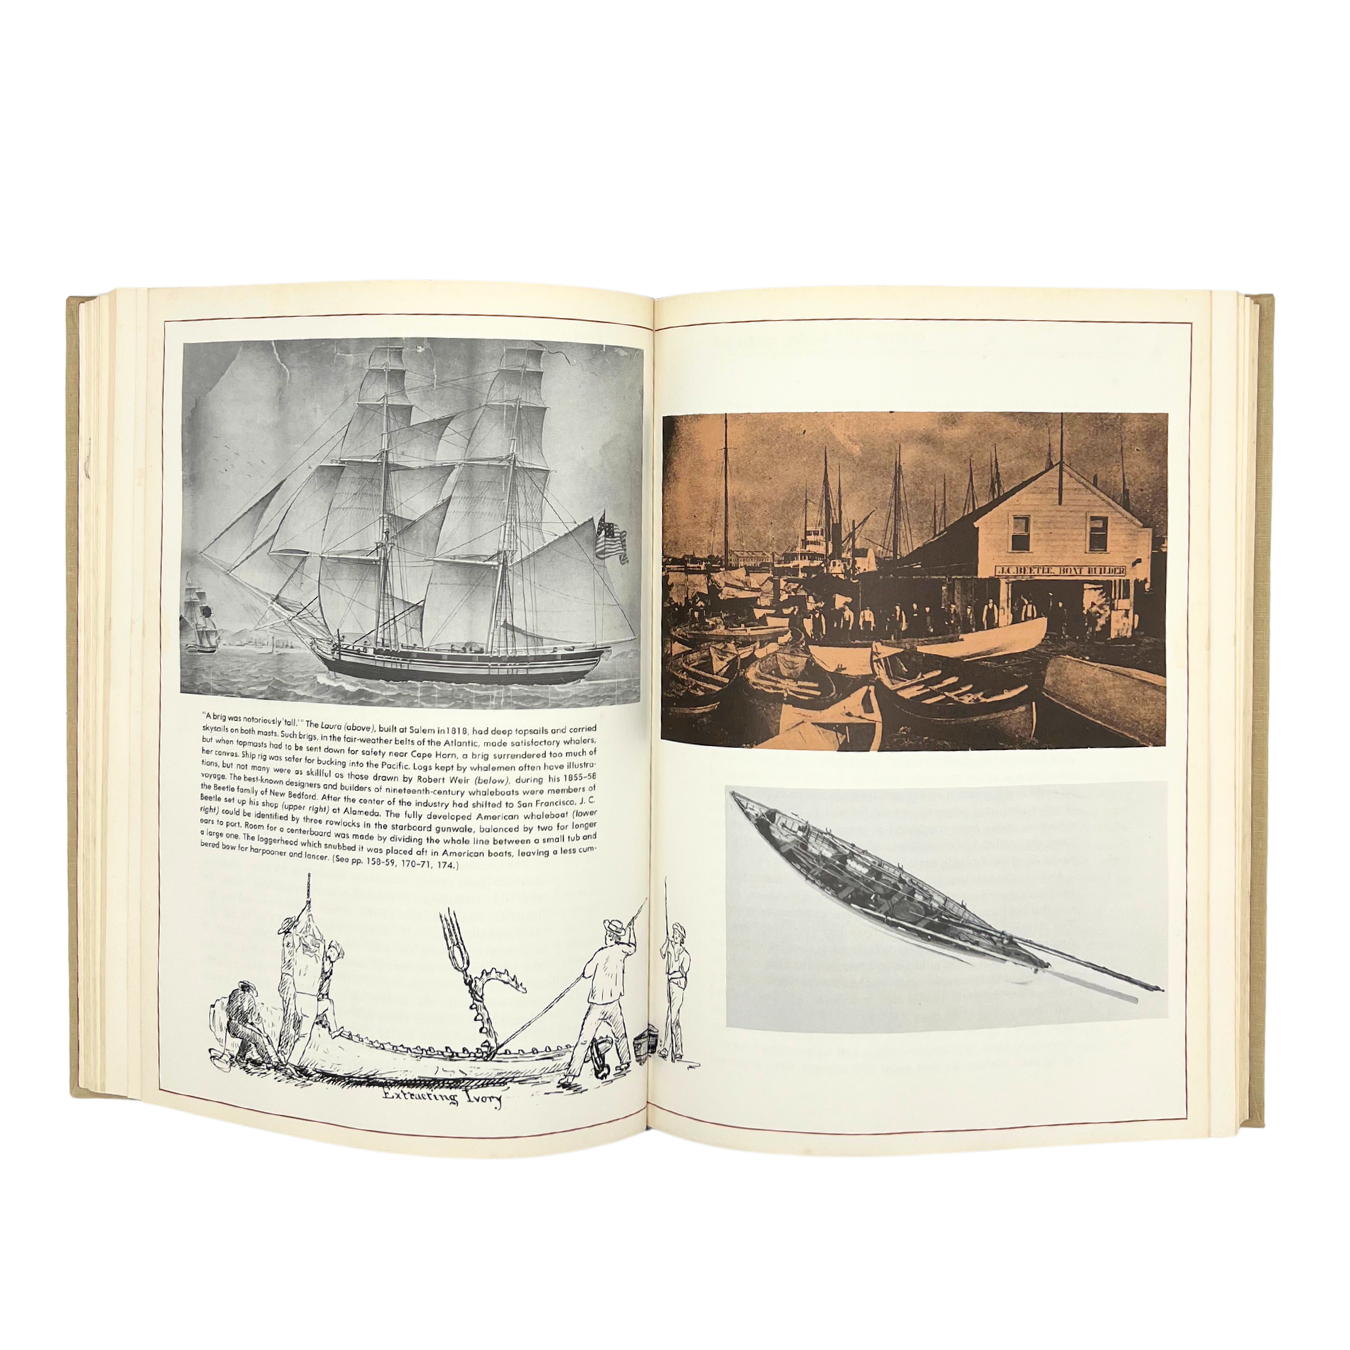 1971 book: American Ships